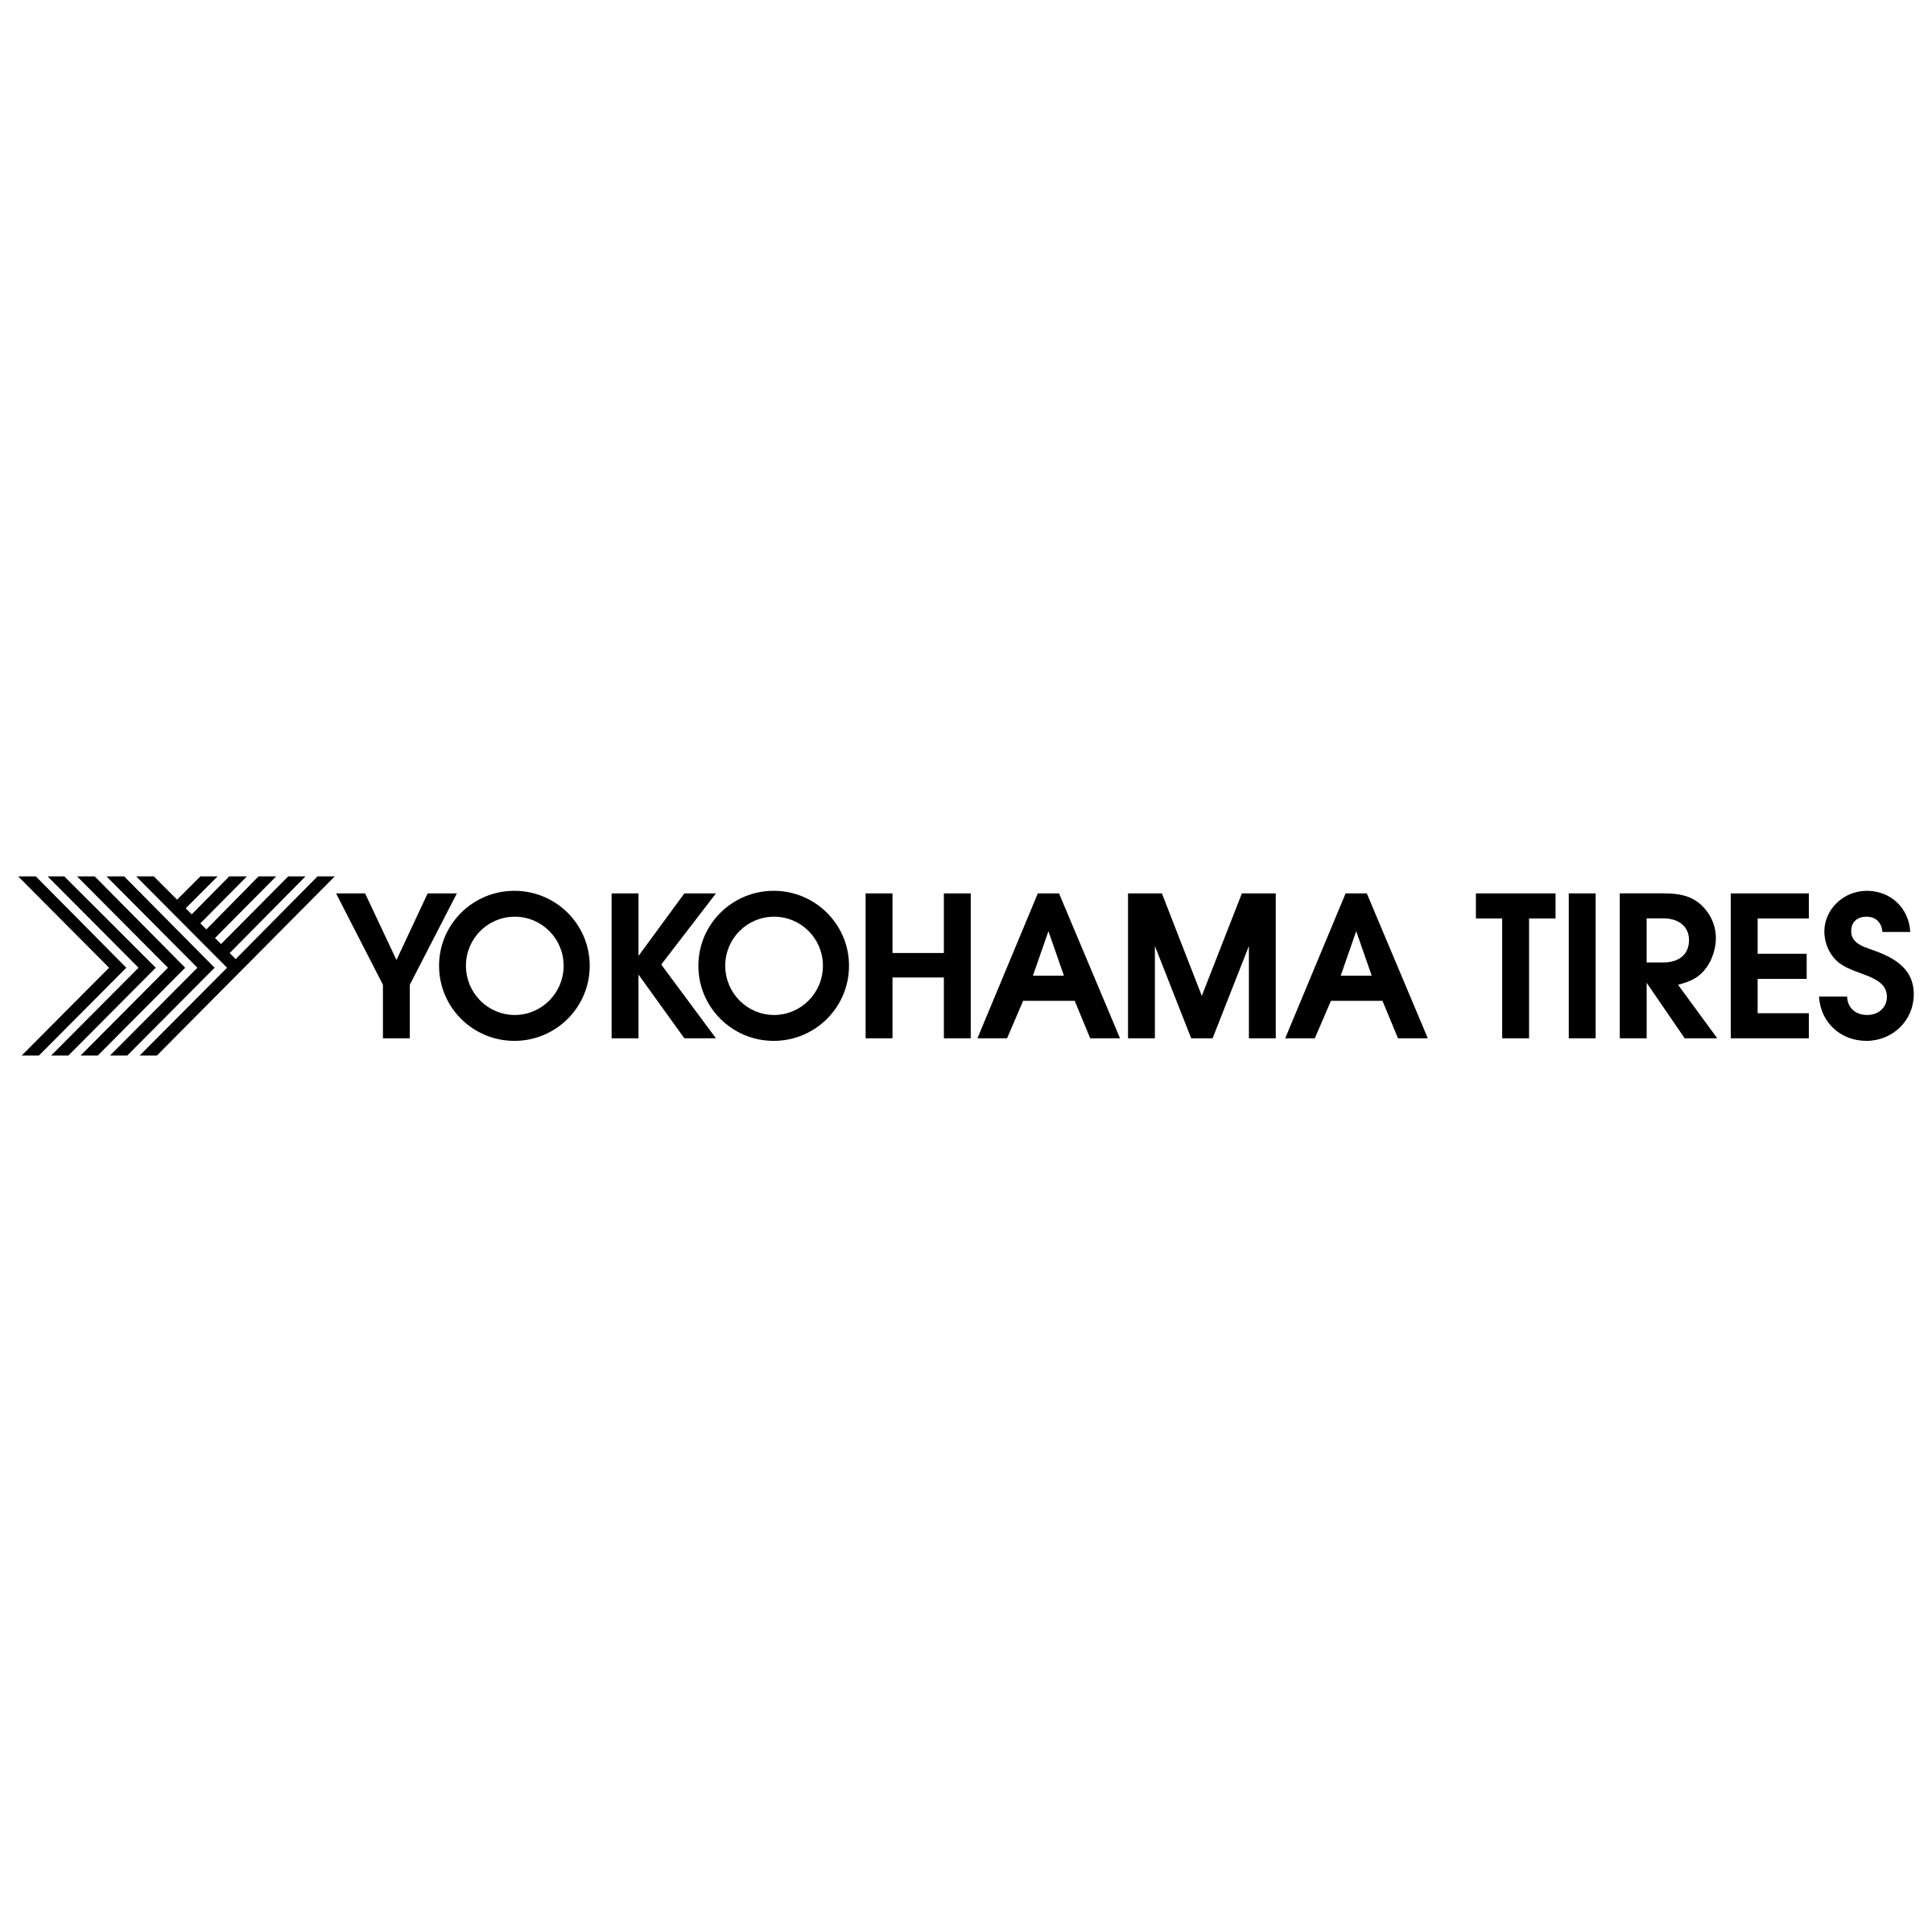 Tires Logo - Yokohama Tires Logo PNG Transparent & SVG Vector - Freebie Supply